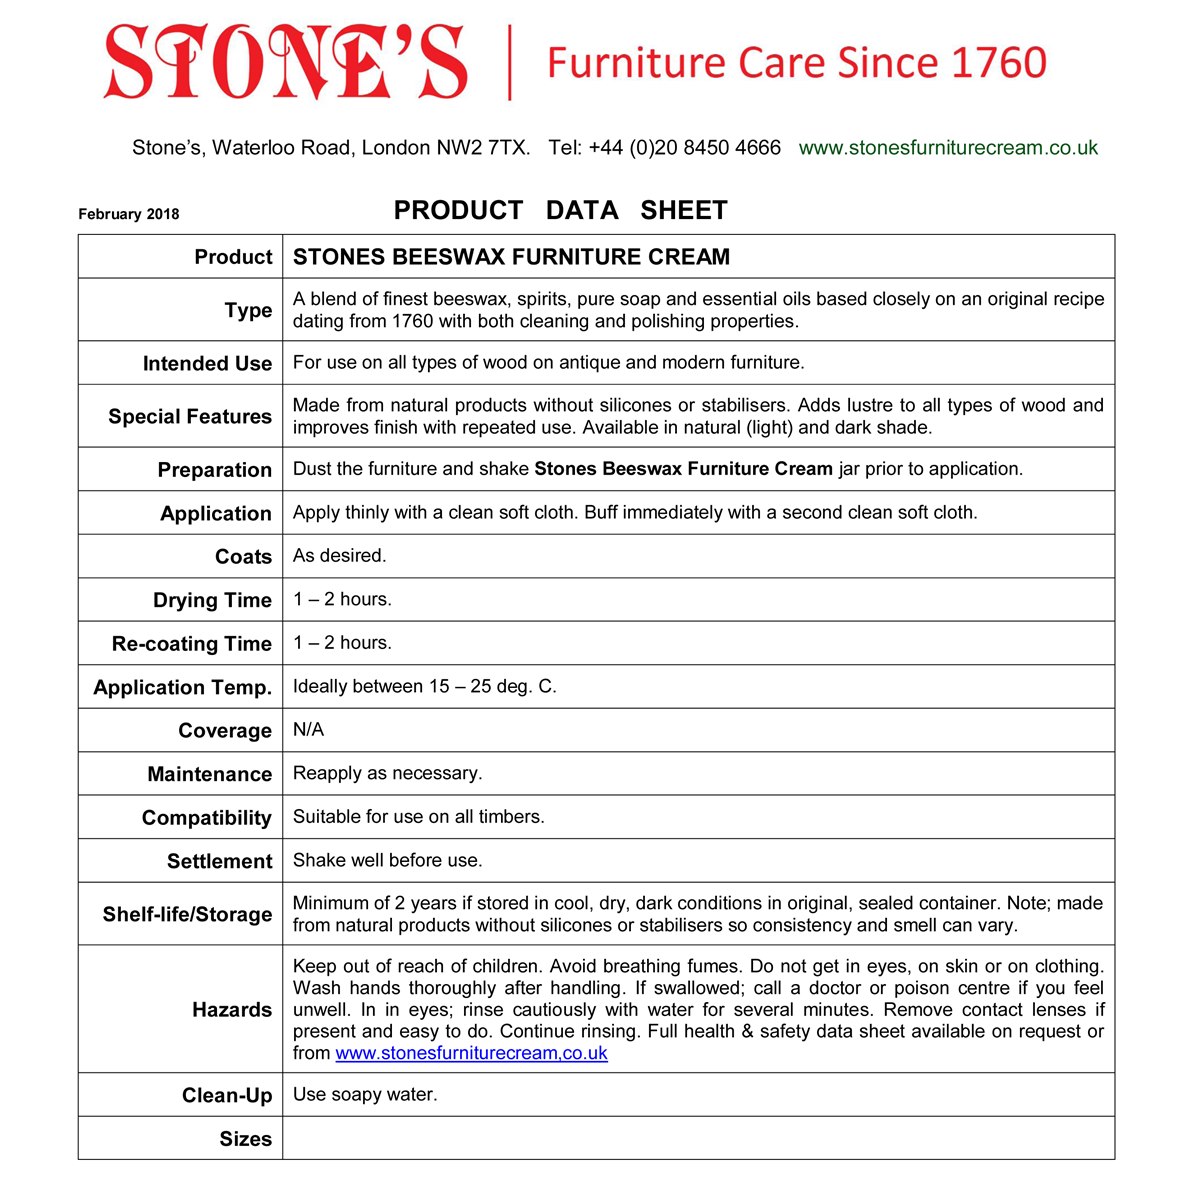 Stones Beeswax Furniture Cream Polish Usage Instructions